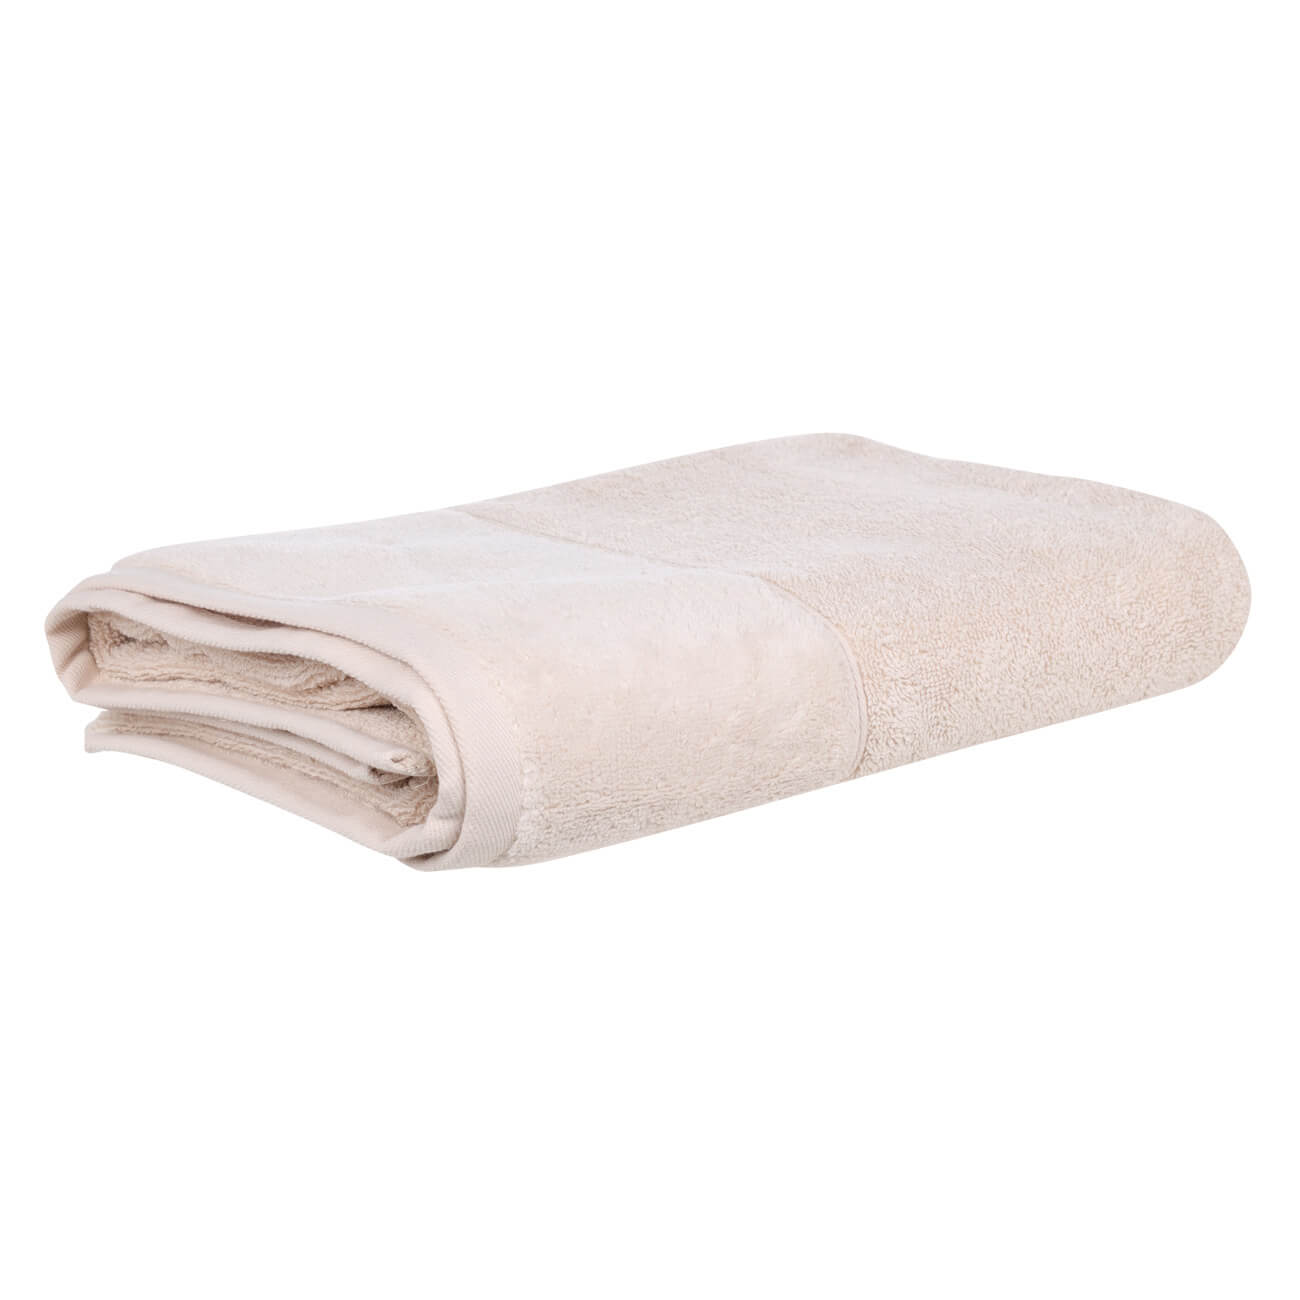 Полотенце, 70х140 см, хлопок, бежевое, Velvet touch набор для полотенце уголок рукавица